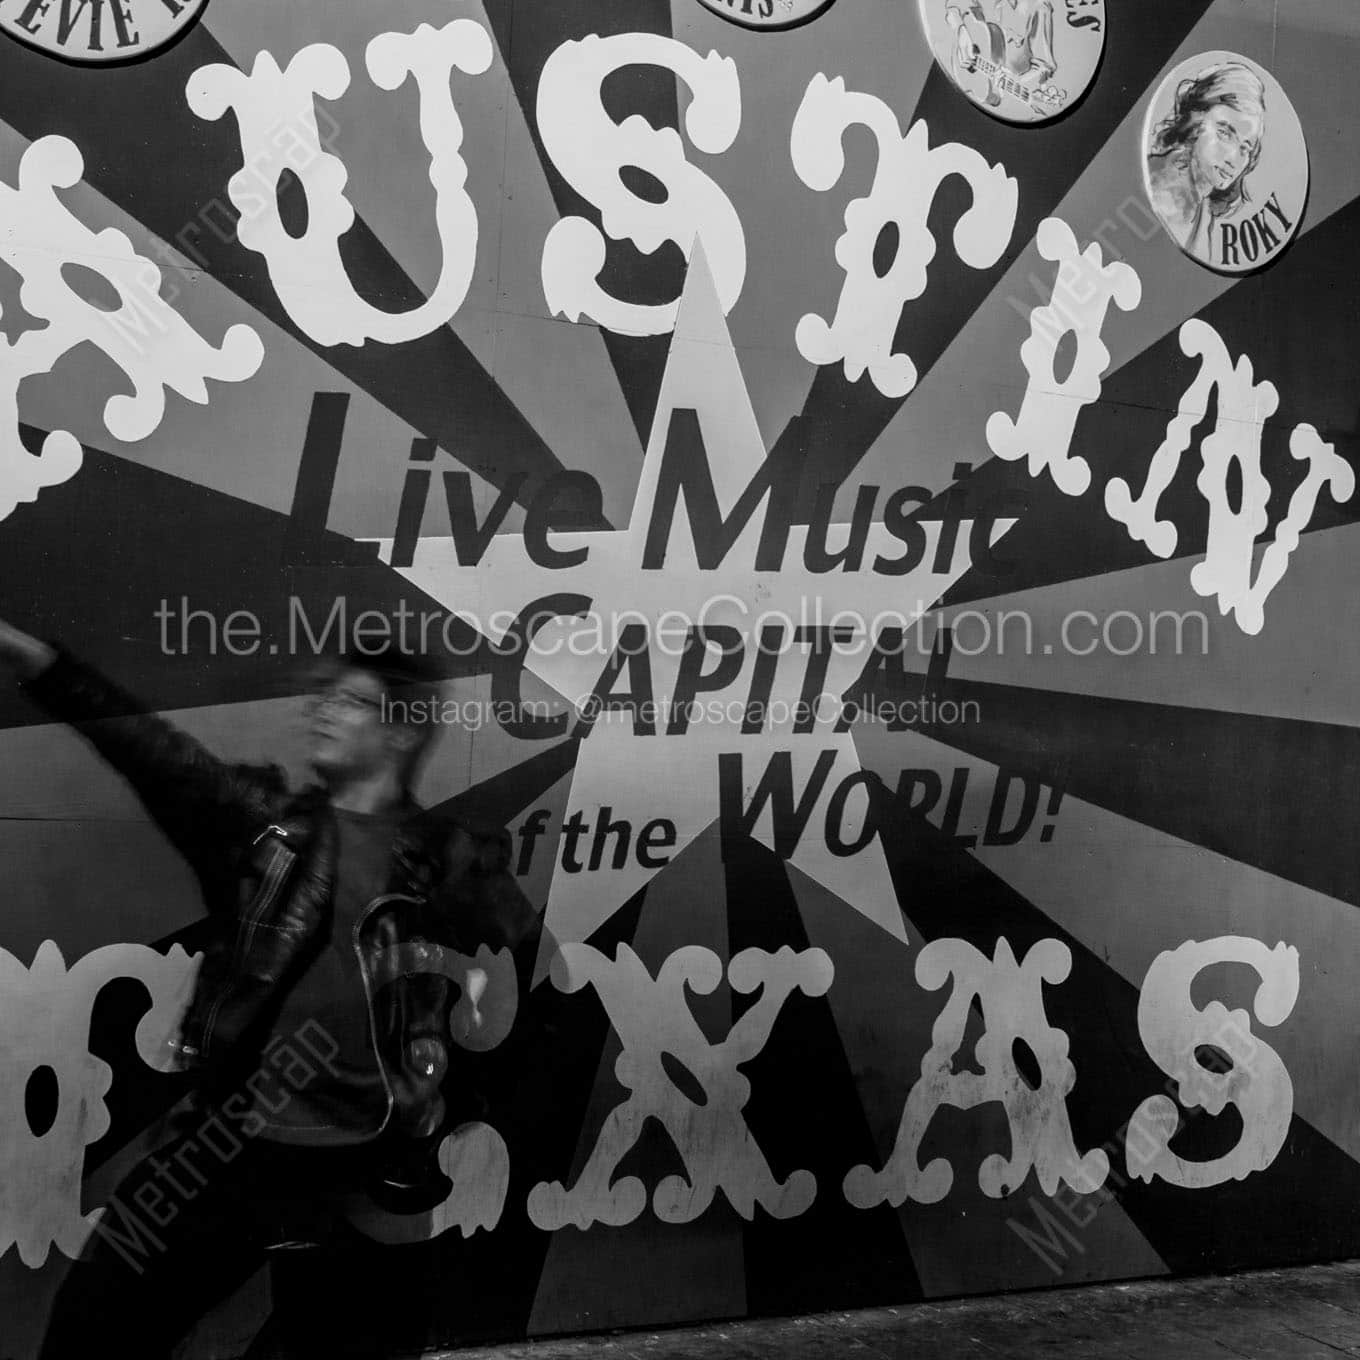 austin live musica capitlal world mural Black & White Wall Art